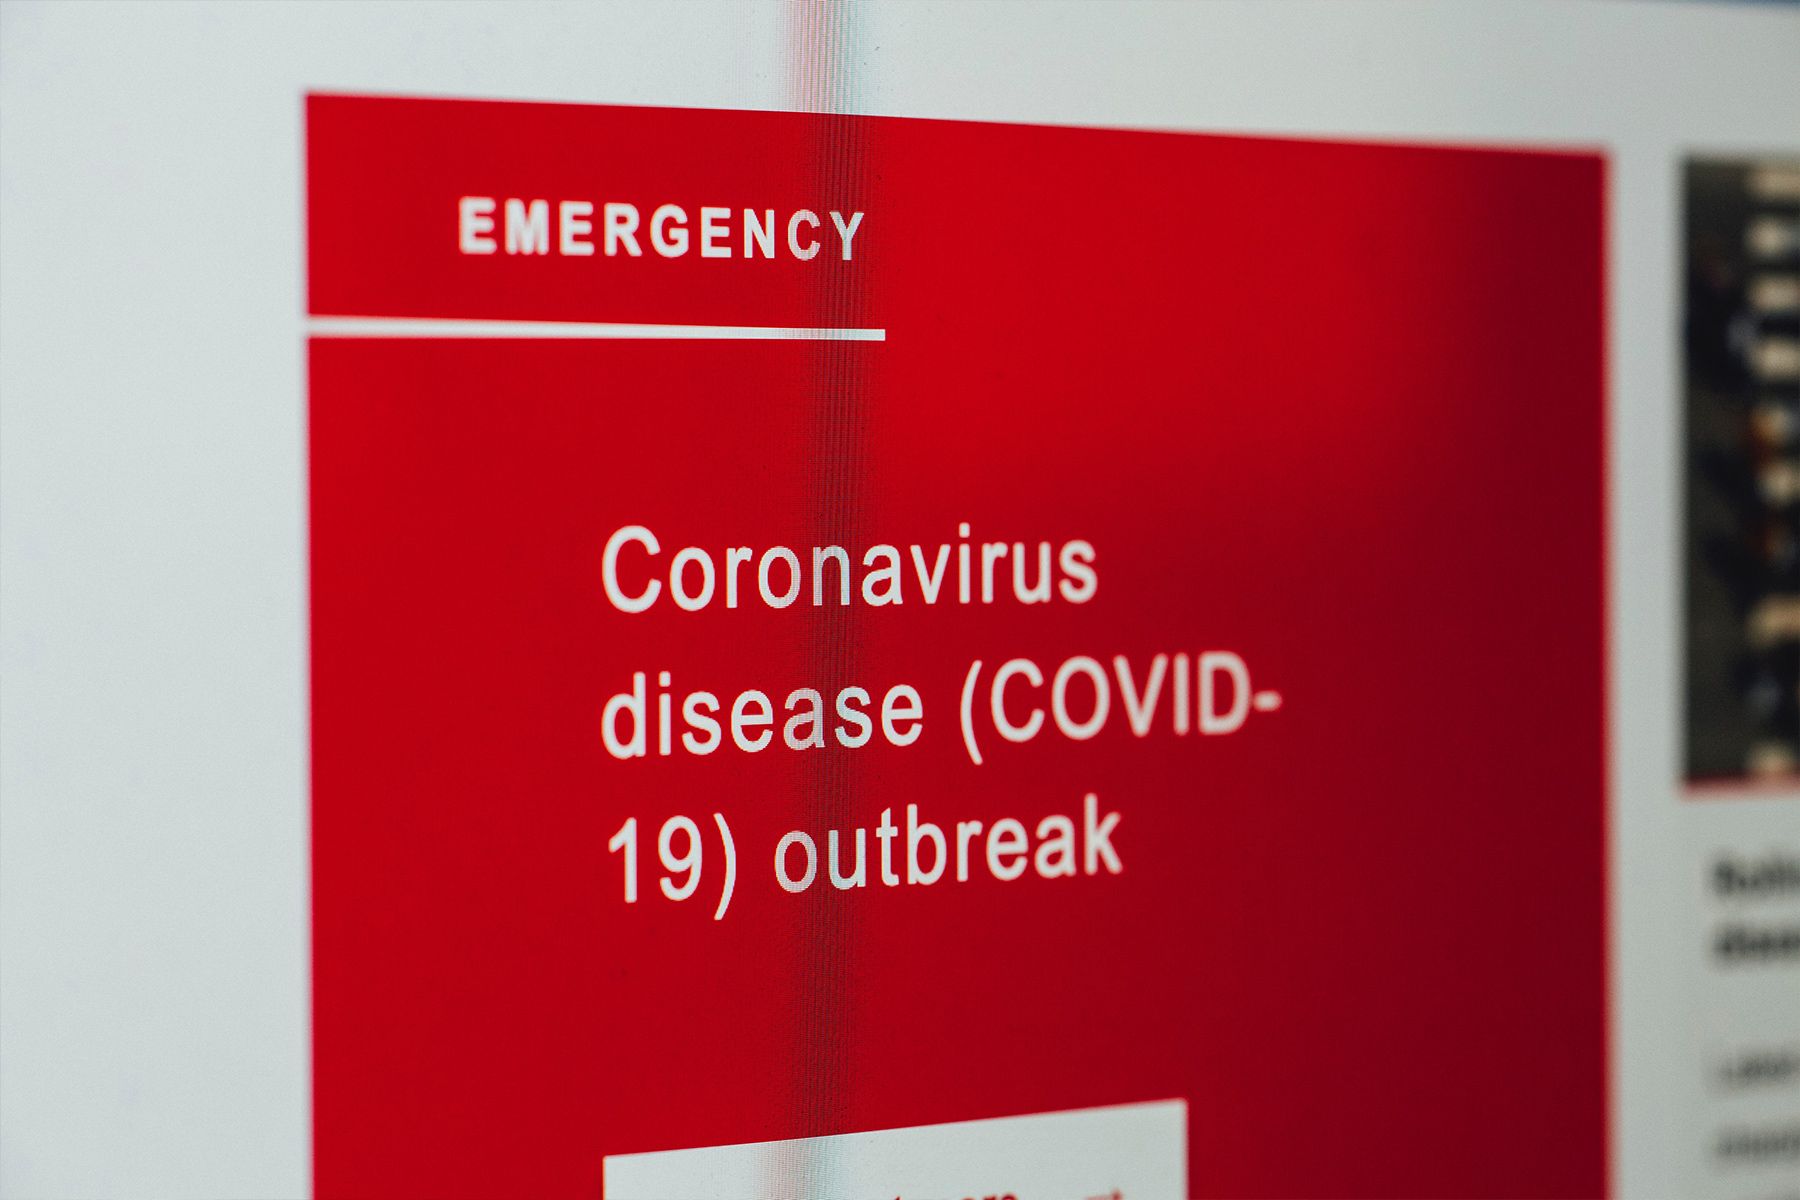 COVID Death Toll Tops 5 Million Worldwide